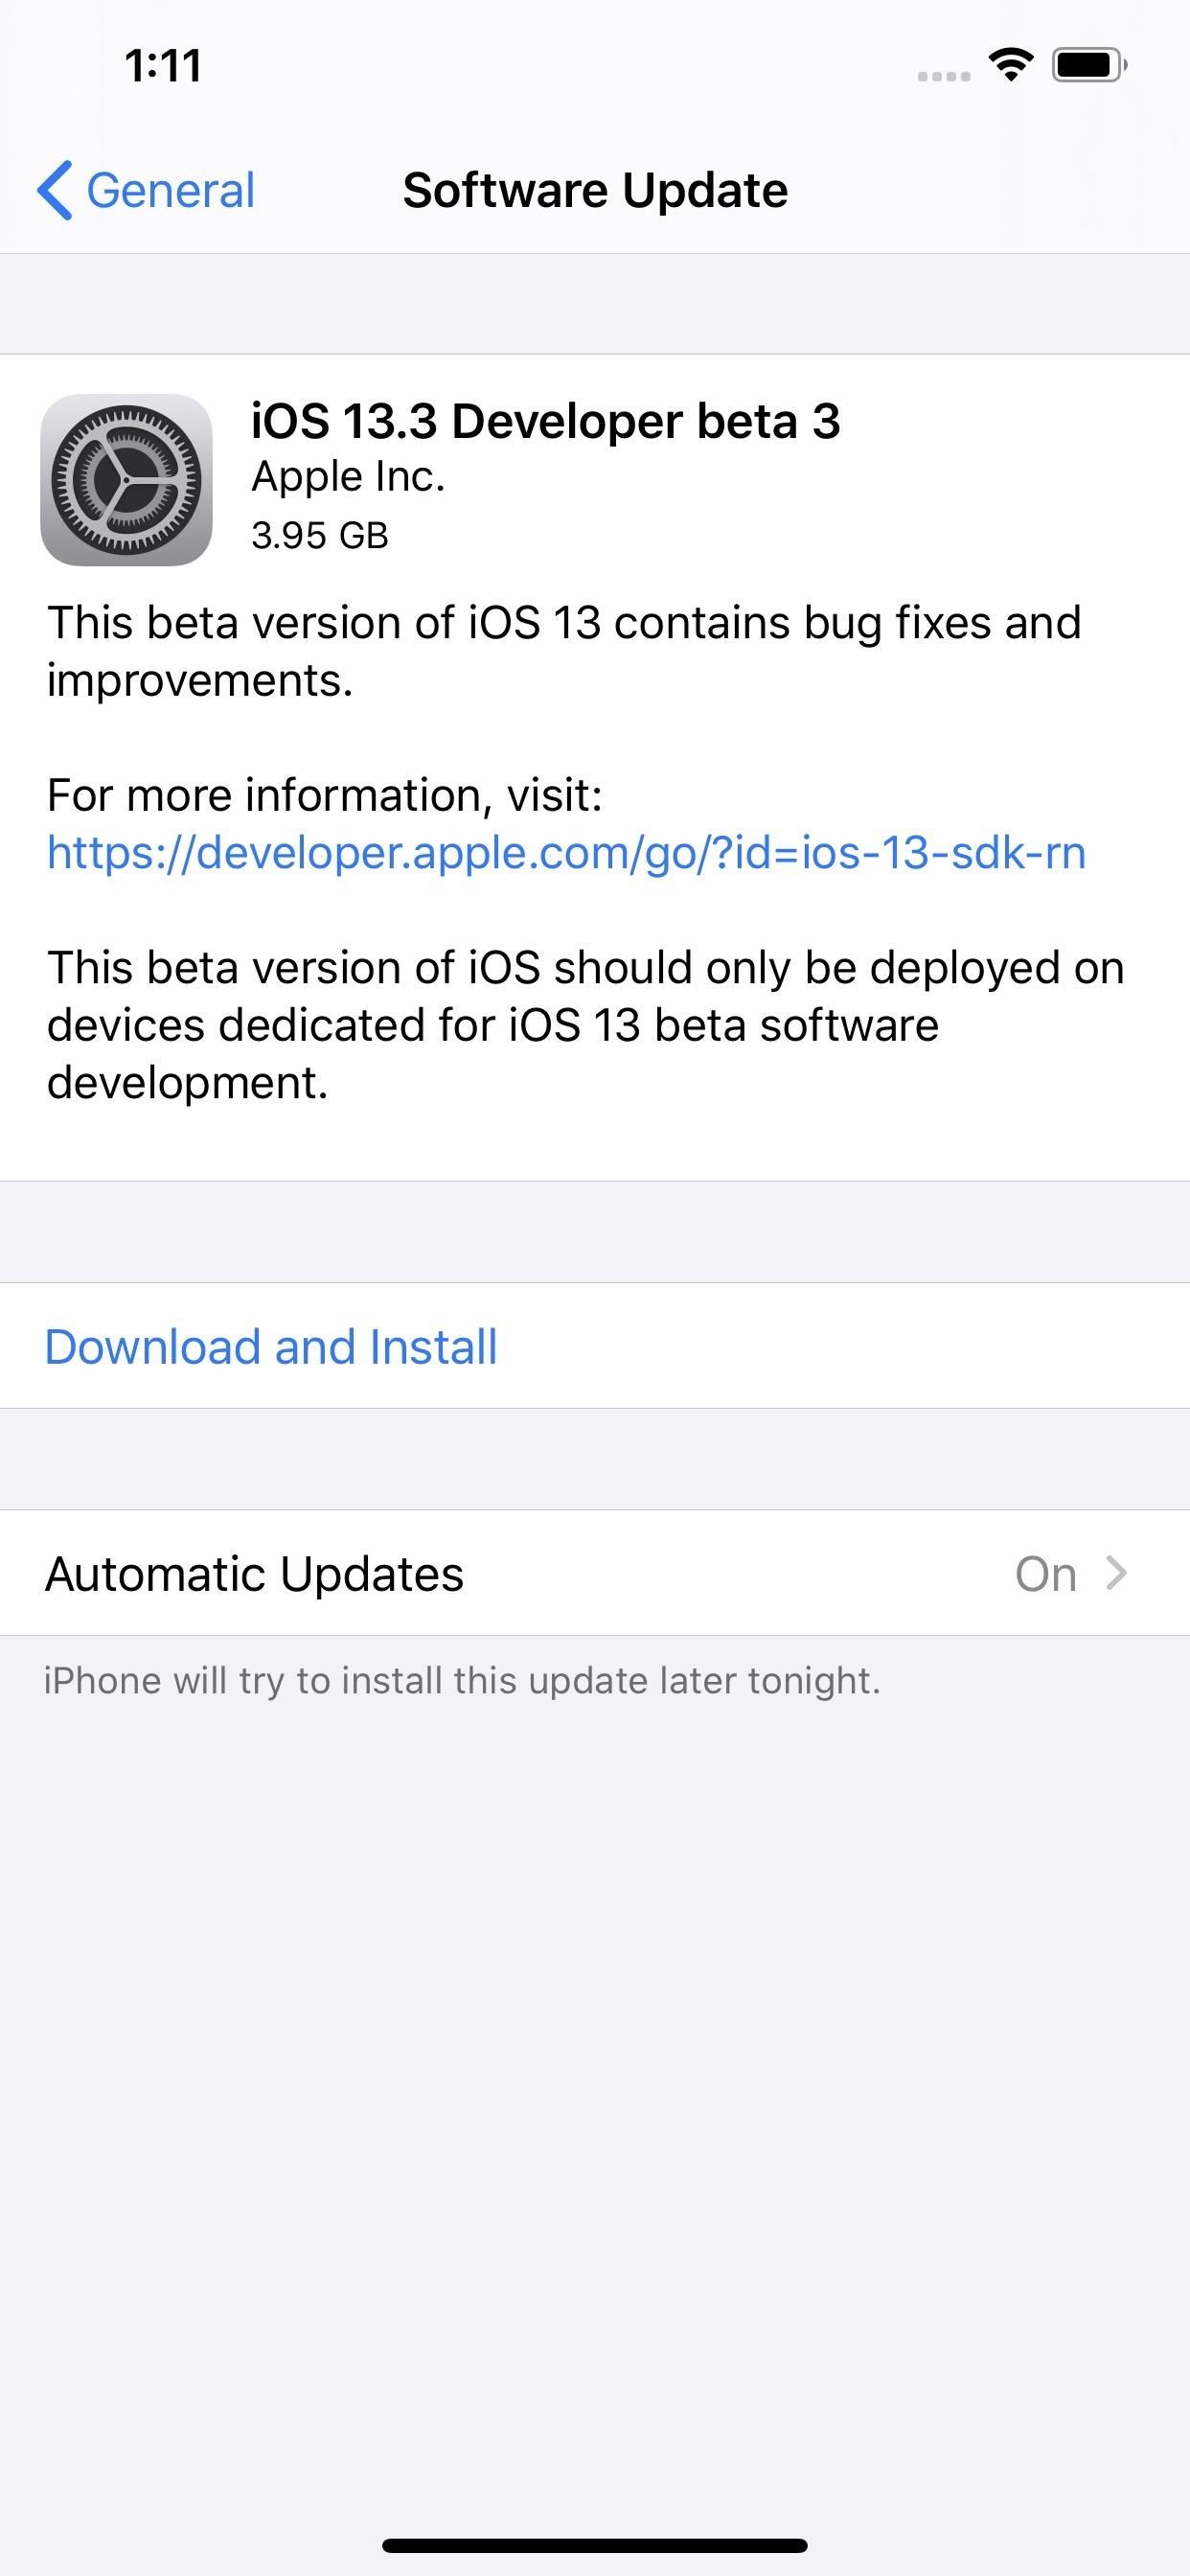 Apple Releases iOS 13.3 Developer Beta 3 for iPhone